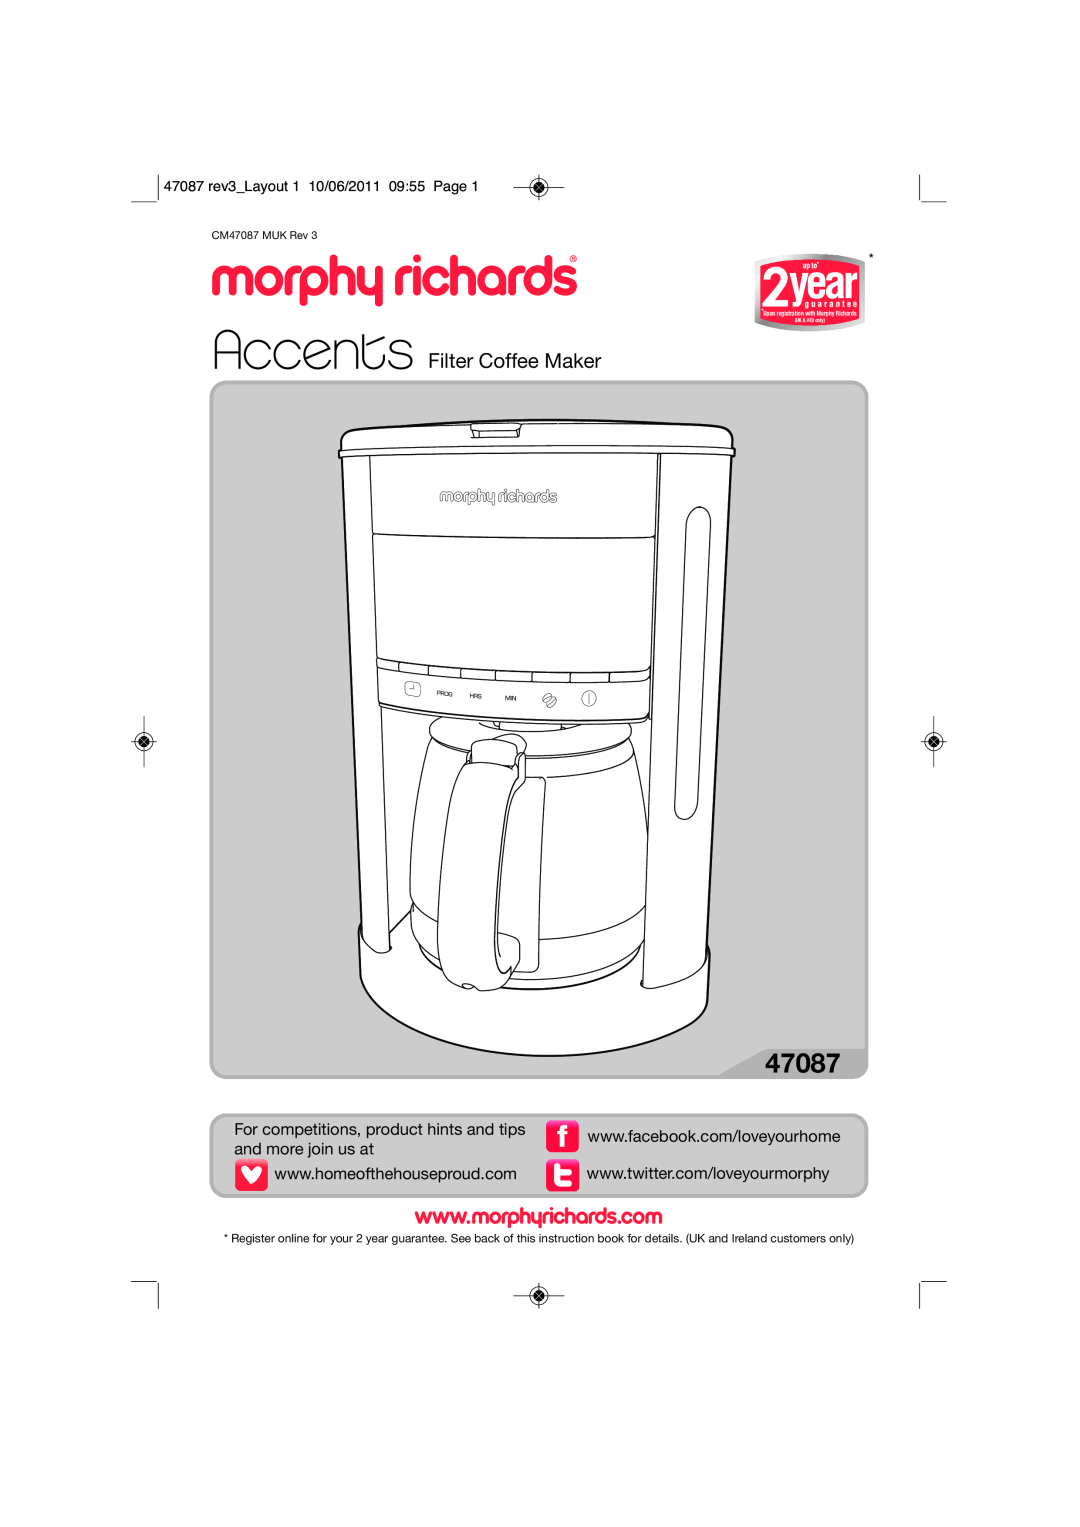 Morphy Richards CM47087 MUK Rev 3 manual 47087 rev3 Layout 1 10/06/2011 09 55 Page, Filter Coffee Maker, UK & ROI only 